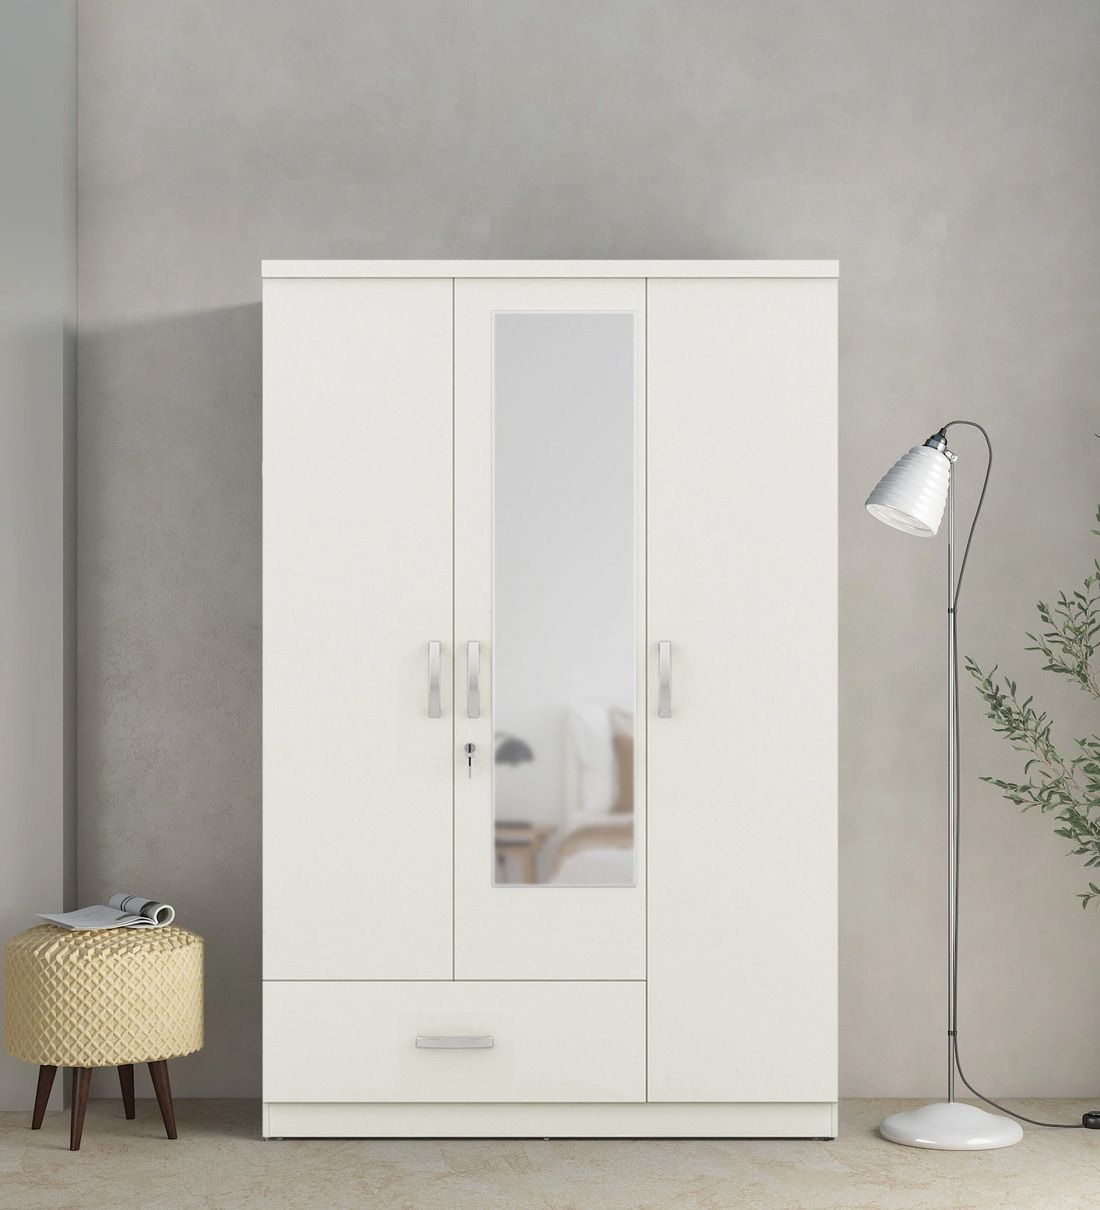 Buy Utsav 3 Door Wardrobe In White Finish With Mirror At 53% Off Hometown | Pepperfry For White 3 Door Mirrored Wardrobes (View 15 of 15)